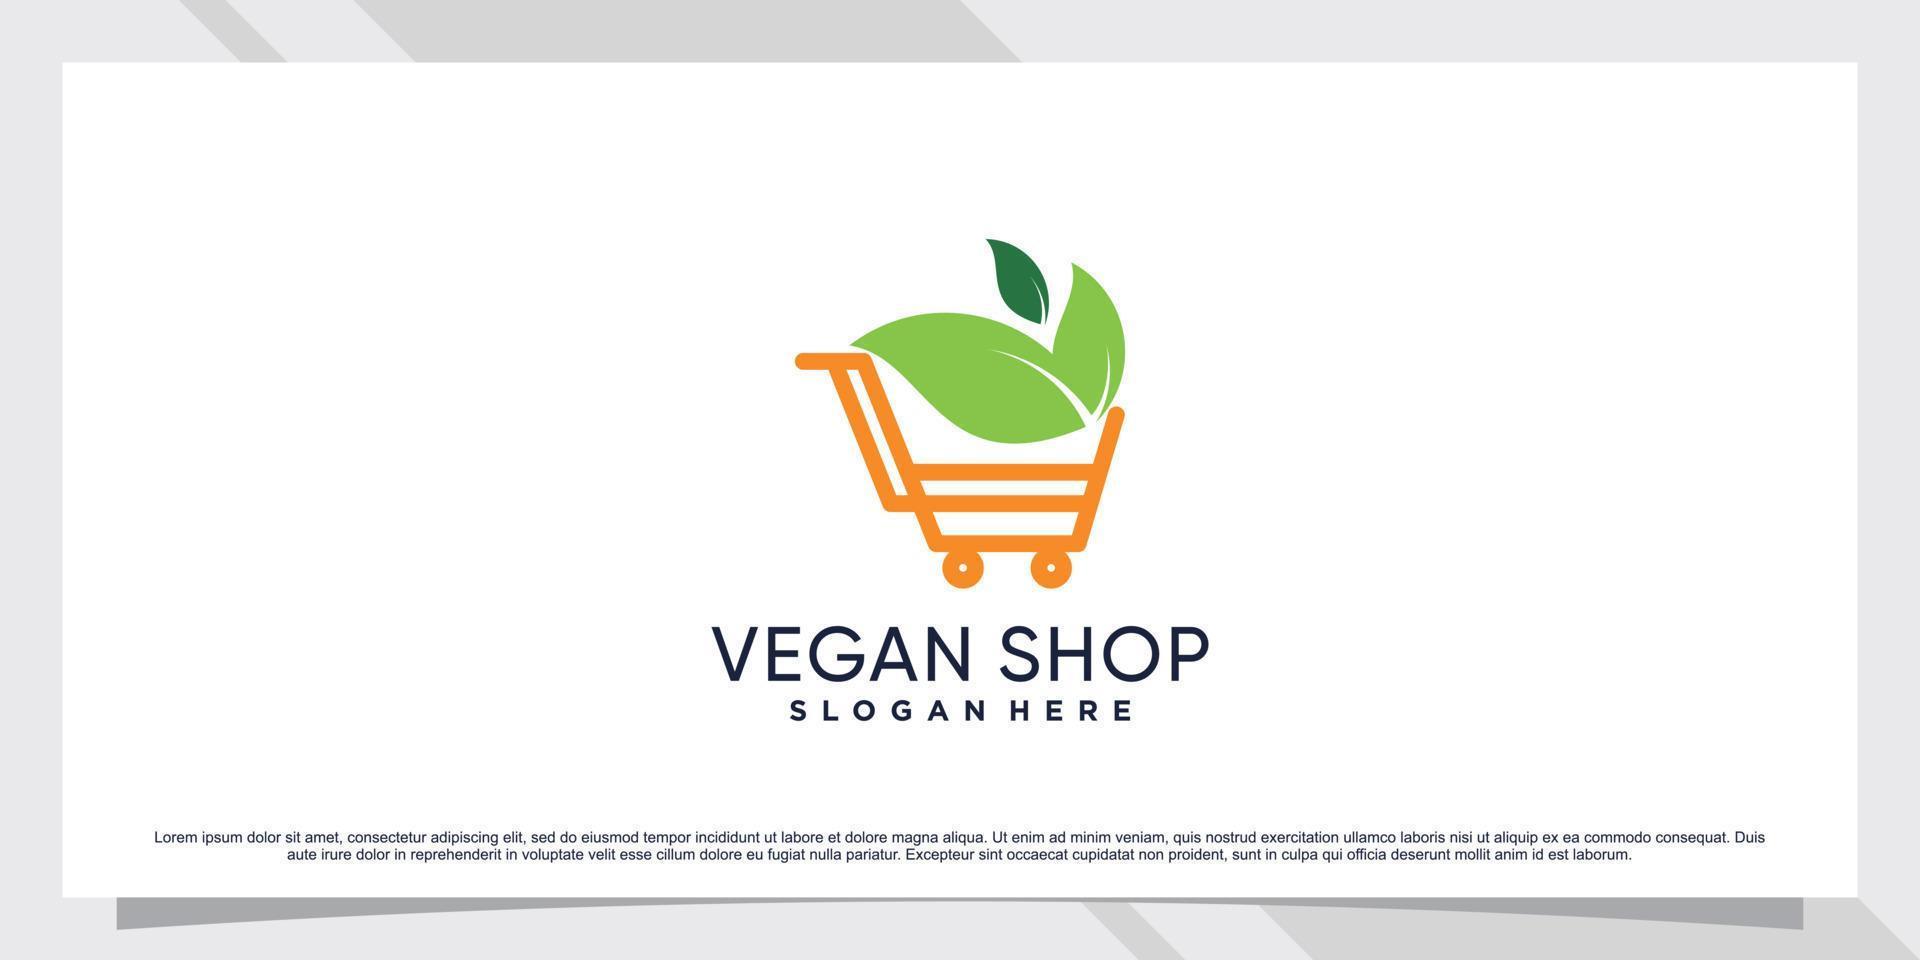 Vegan shop logo design with leaf element and creative concept vector